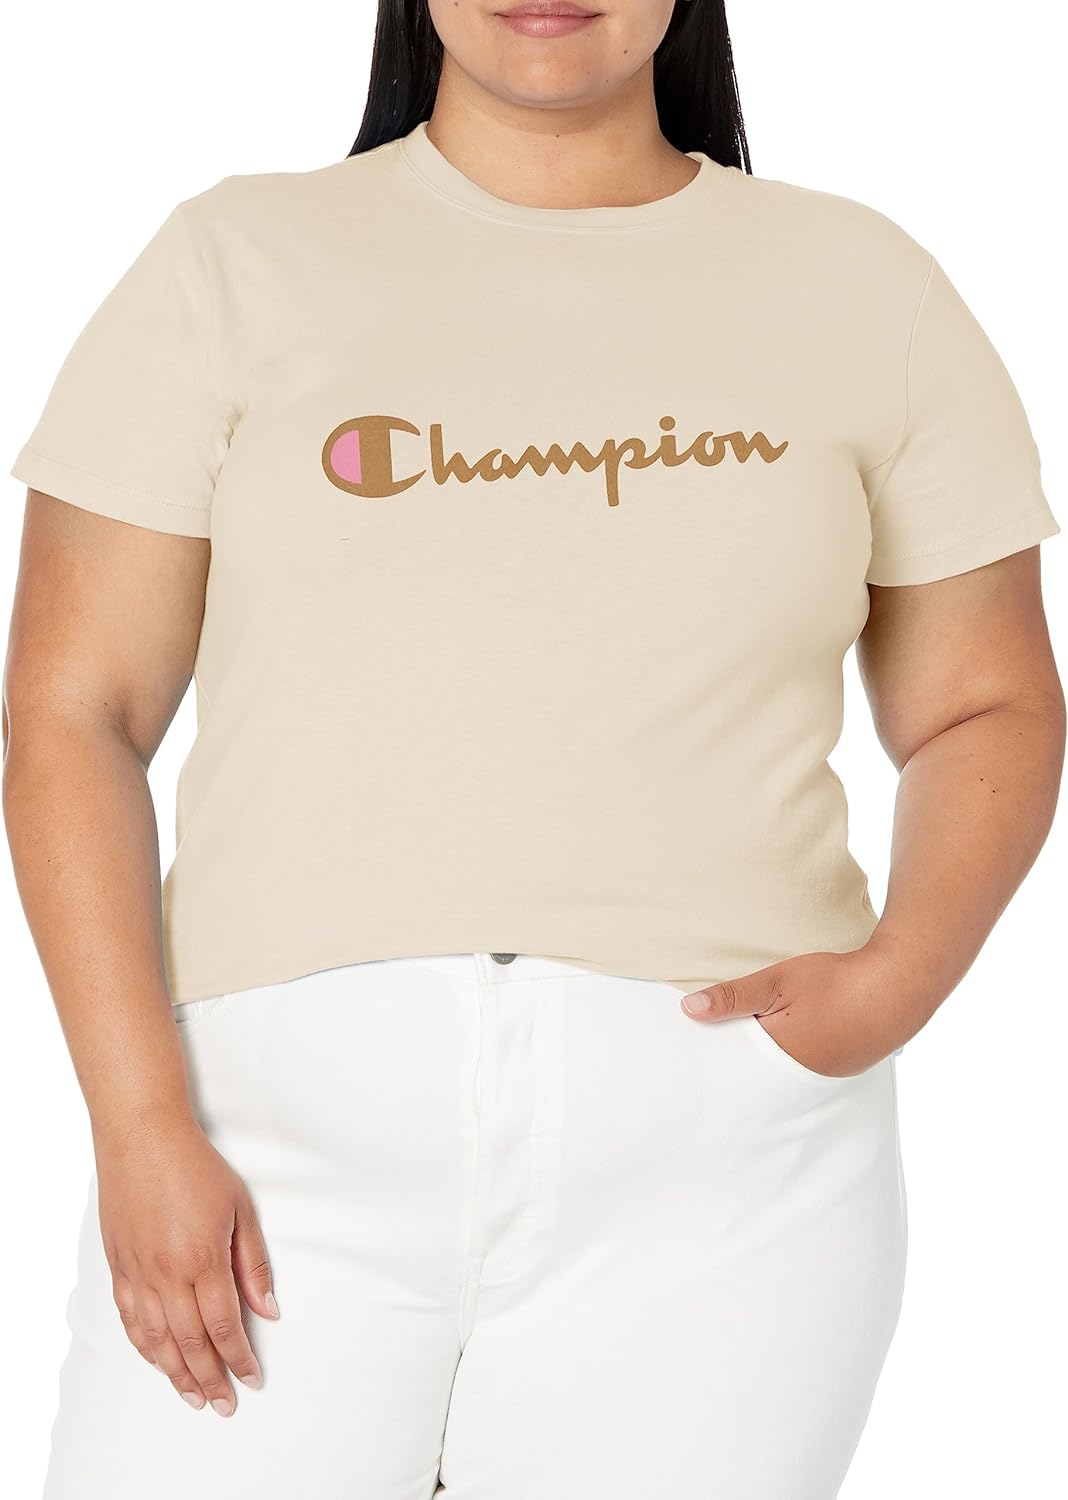 Champion Women's T-shirt, Classic Tee, Comfortable T-shirt for Women,  Script (Plus Size Available)